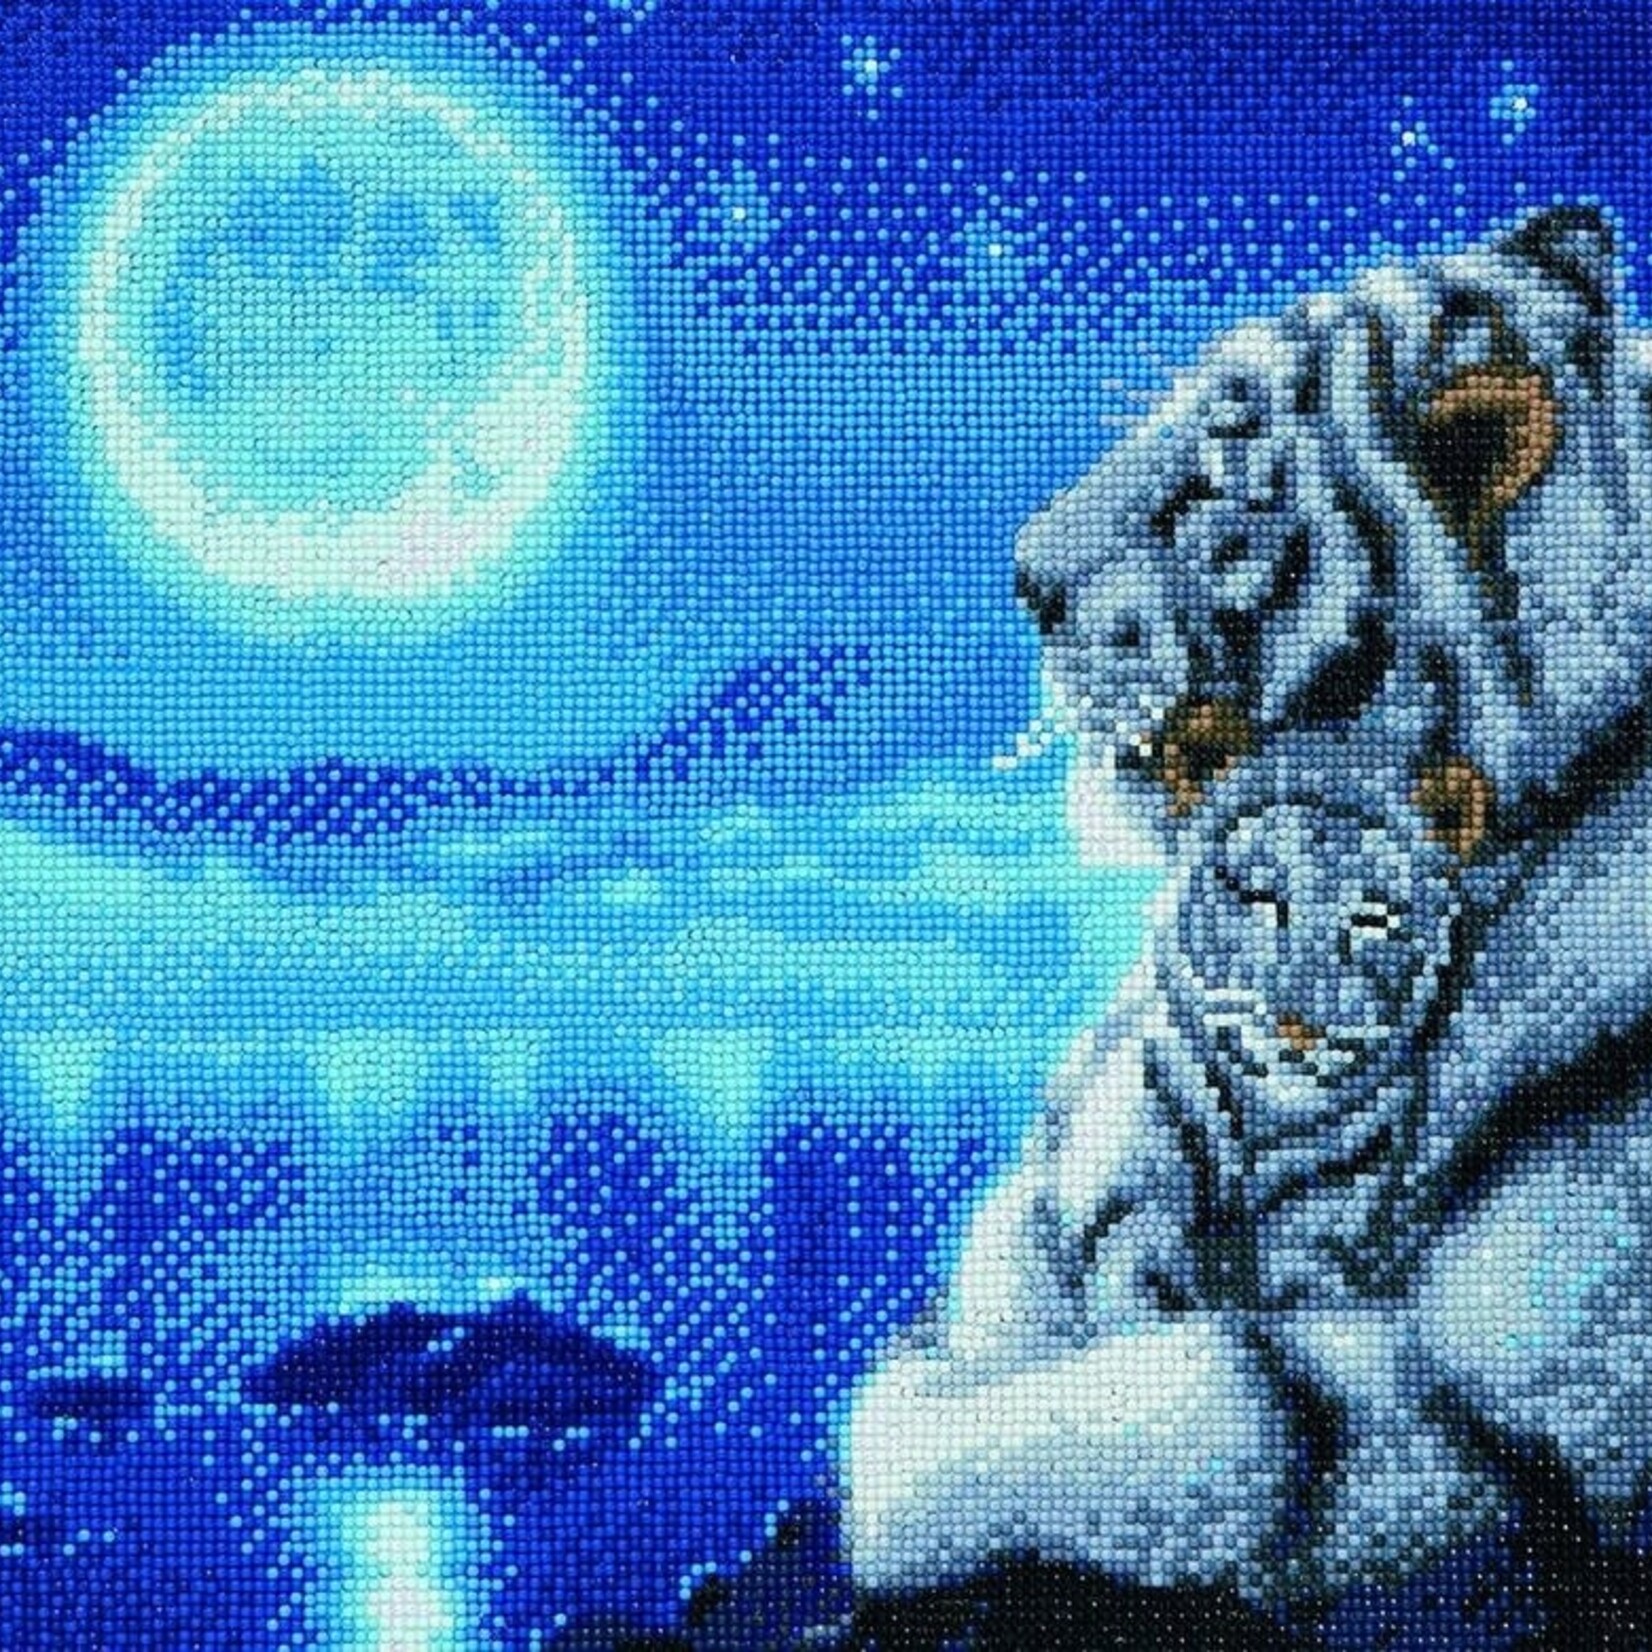 Craft Buddy Craft Buddy - Crystal Art - Lullaby White Tigers (40 x 50 cm)